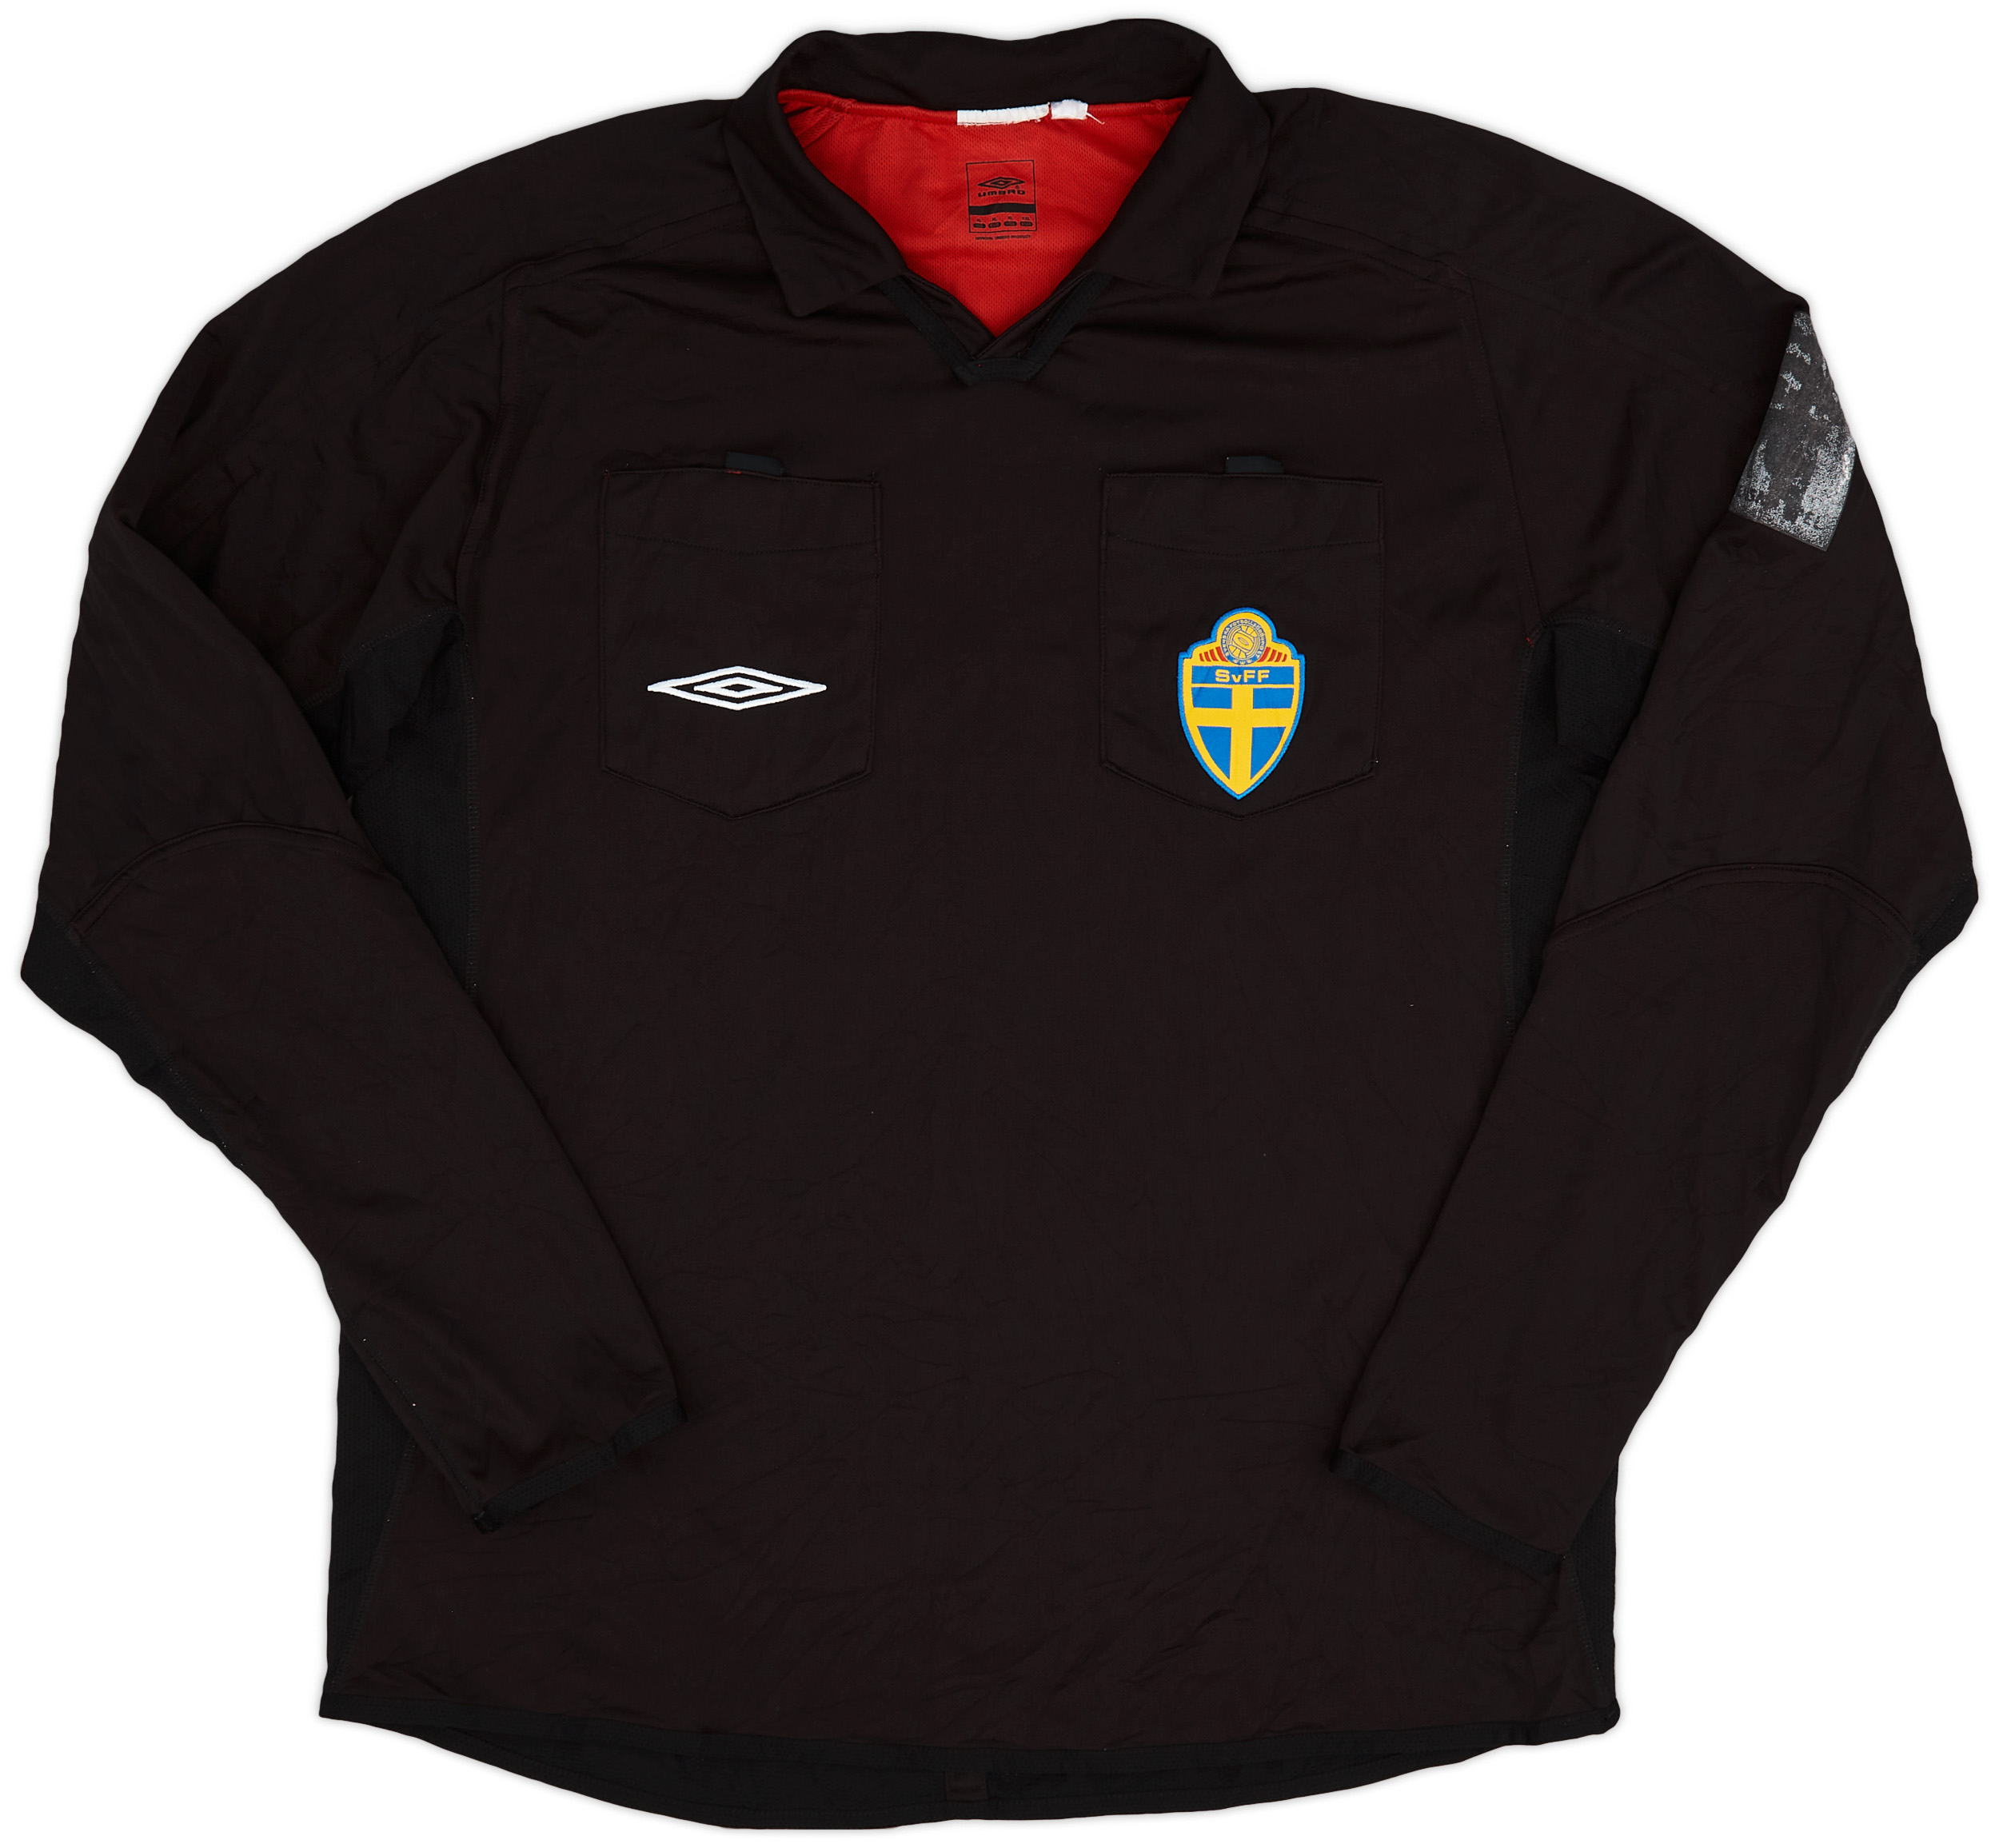 2000s Sweden Umbro Referee Shirt - 5/10 - ()